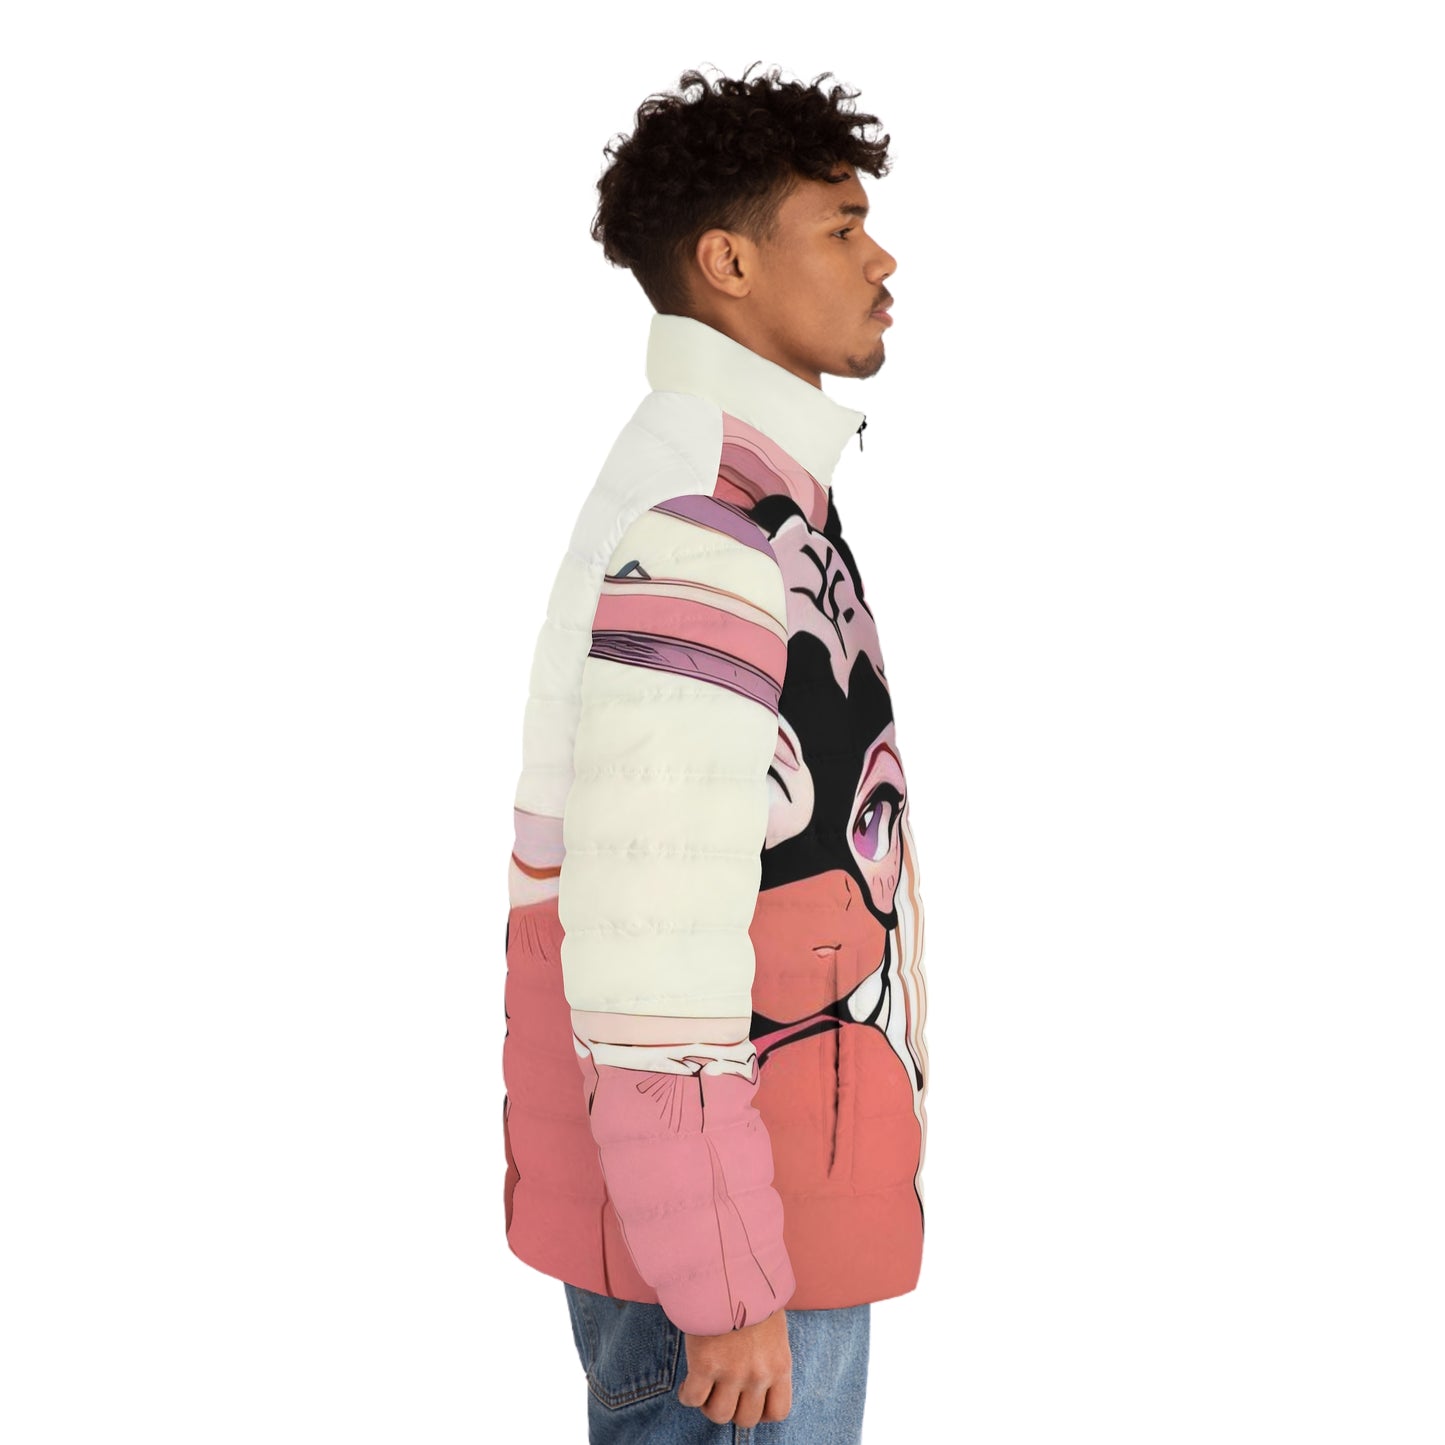 Anime Style Art Men's Puffer Jacket (AOP)- "Pink Kitty"